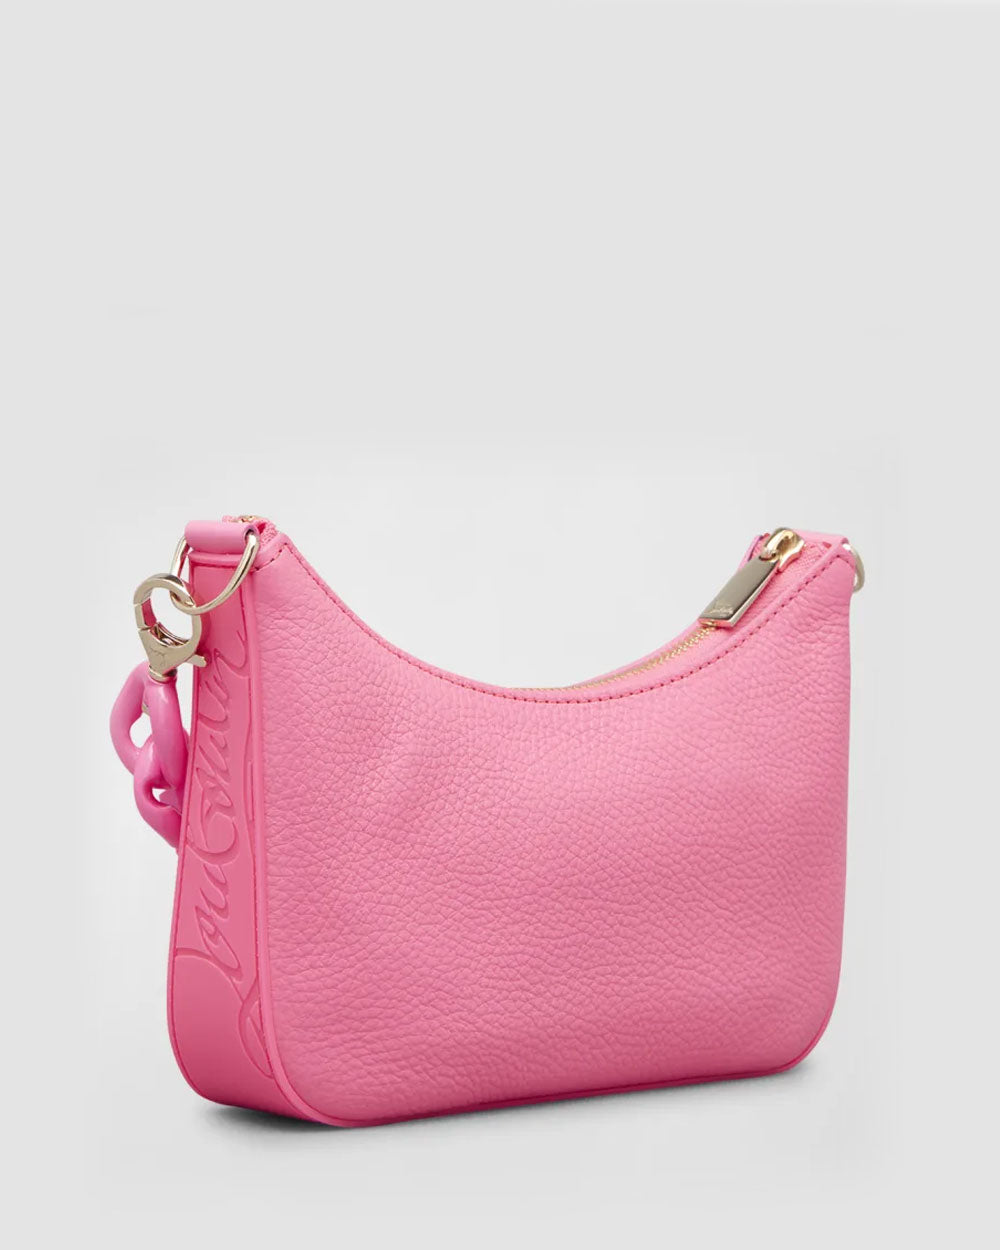 Loubila Chain Mini Leather Shoulder Bag in Pink - Christian